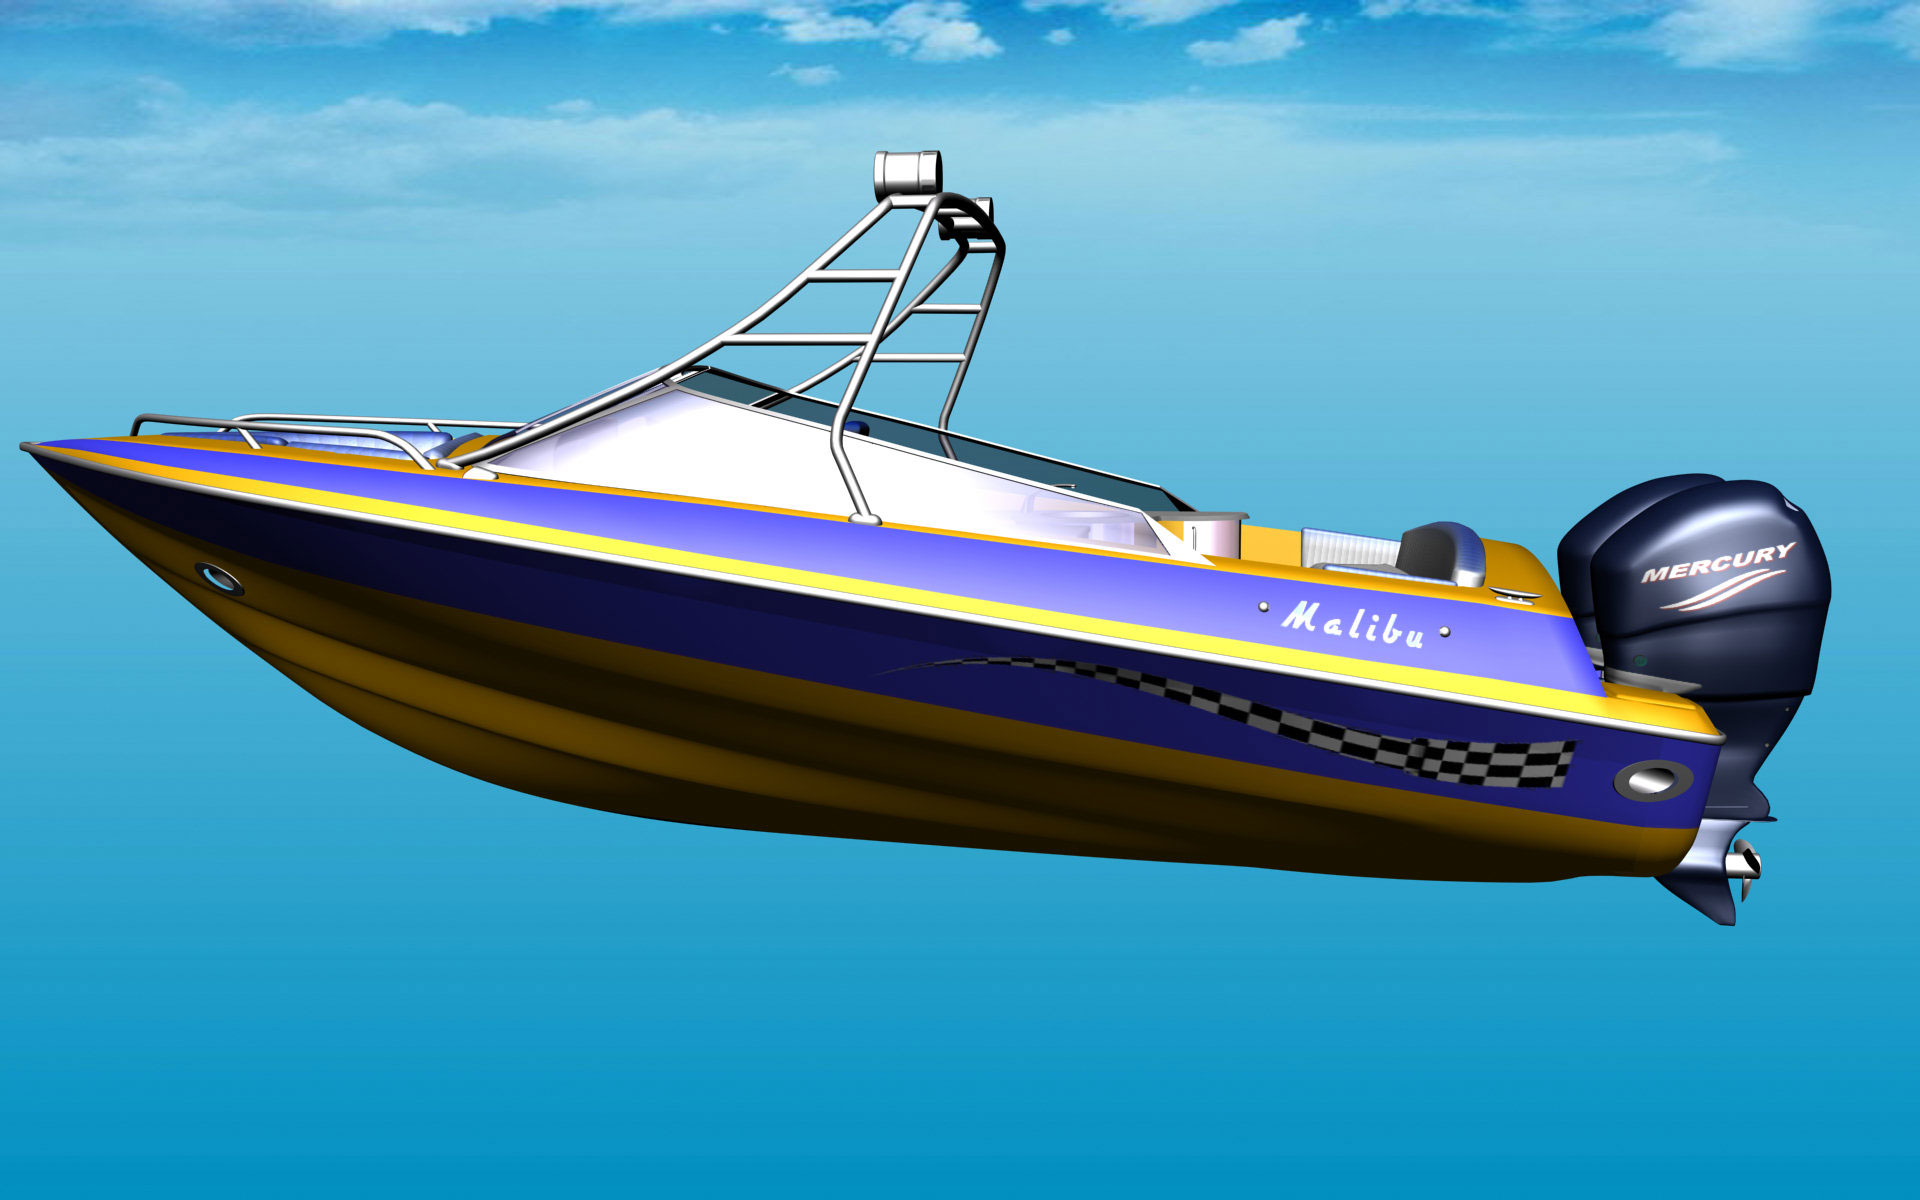 Malibu 32 Motor Boat for FSX by Deltasim Studio